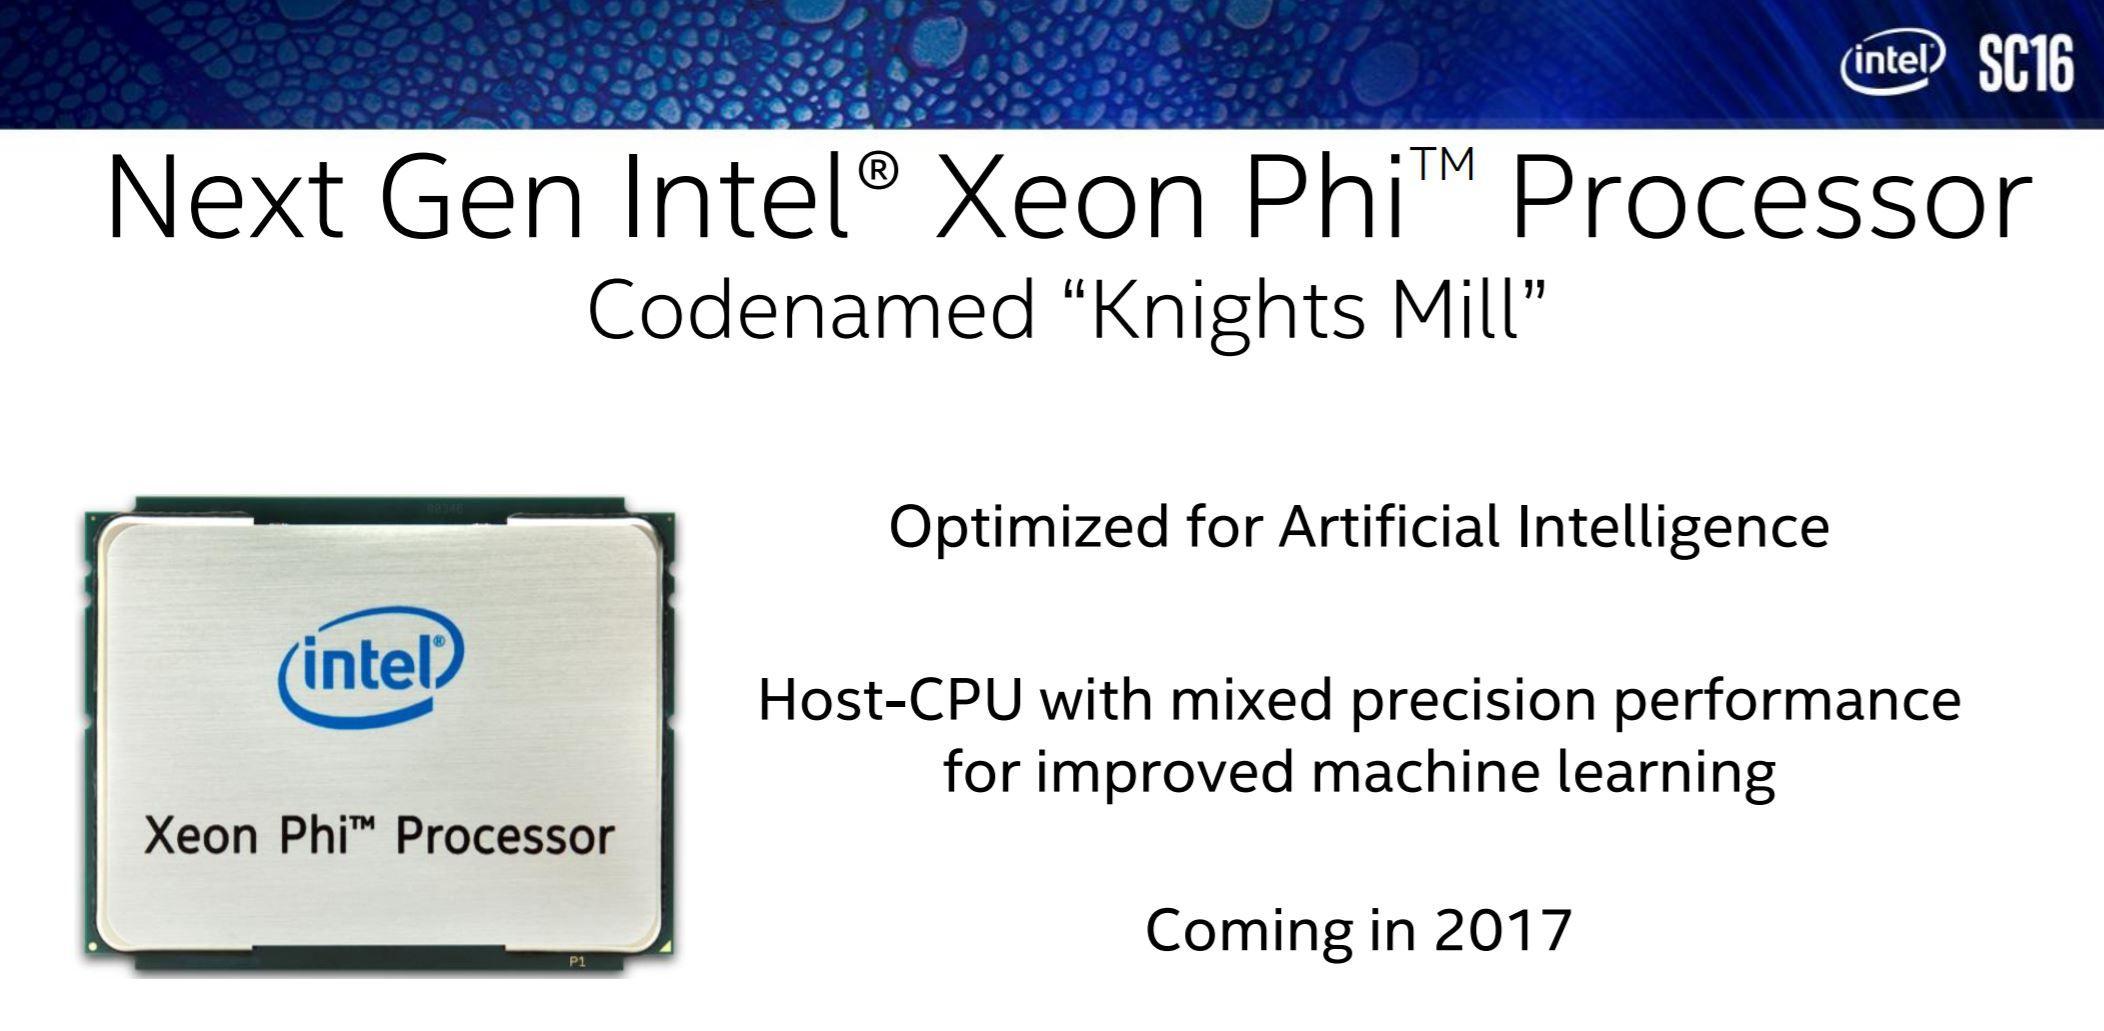 Intel Xeon Phi Logo - Intel Xeon Phi Updates at SC16